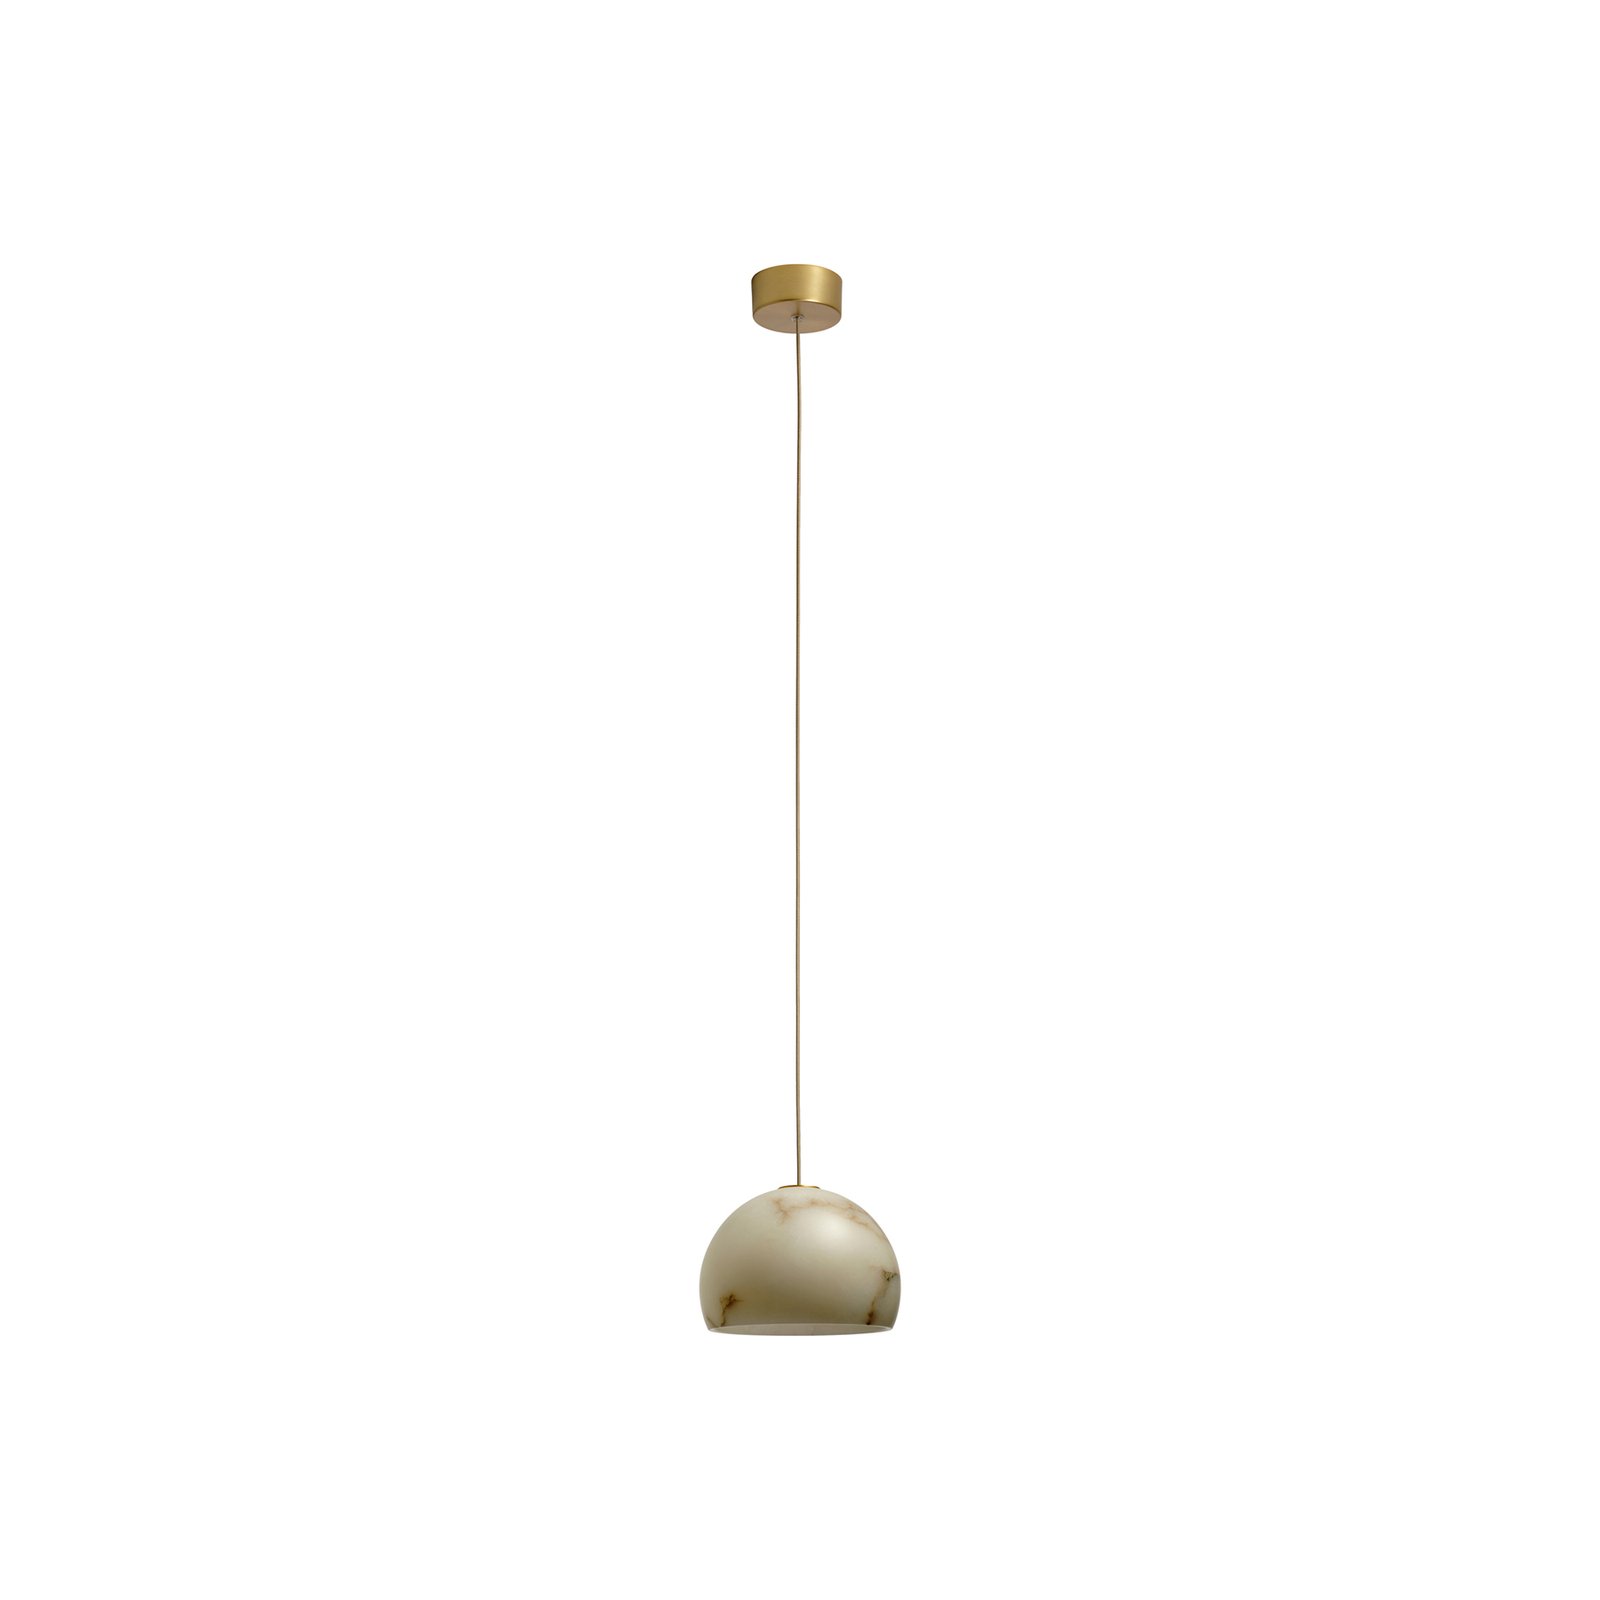 Neil LED pendant light, Alabast, gold, Ø 21cm